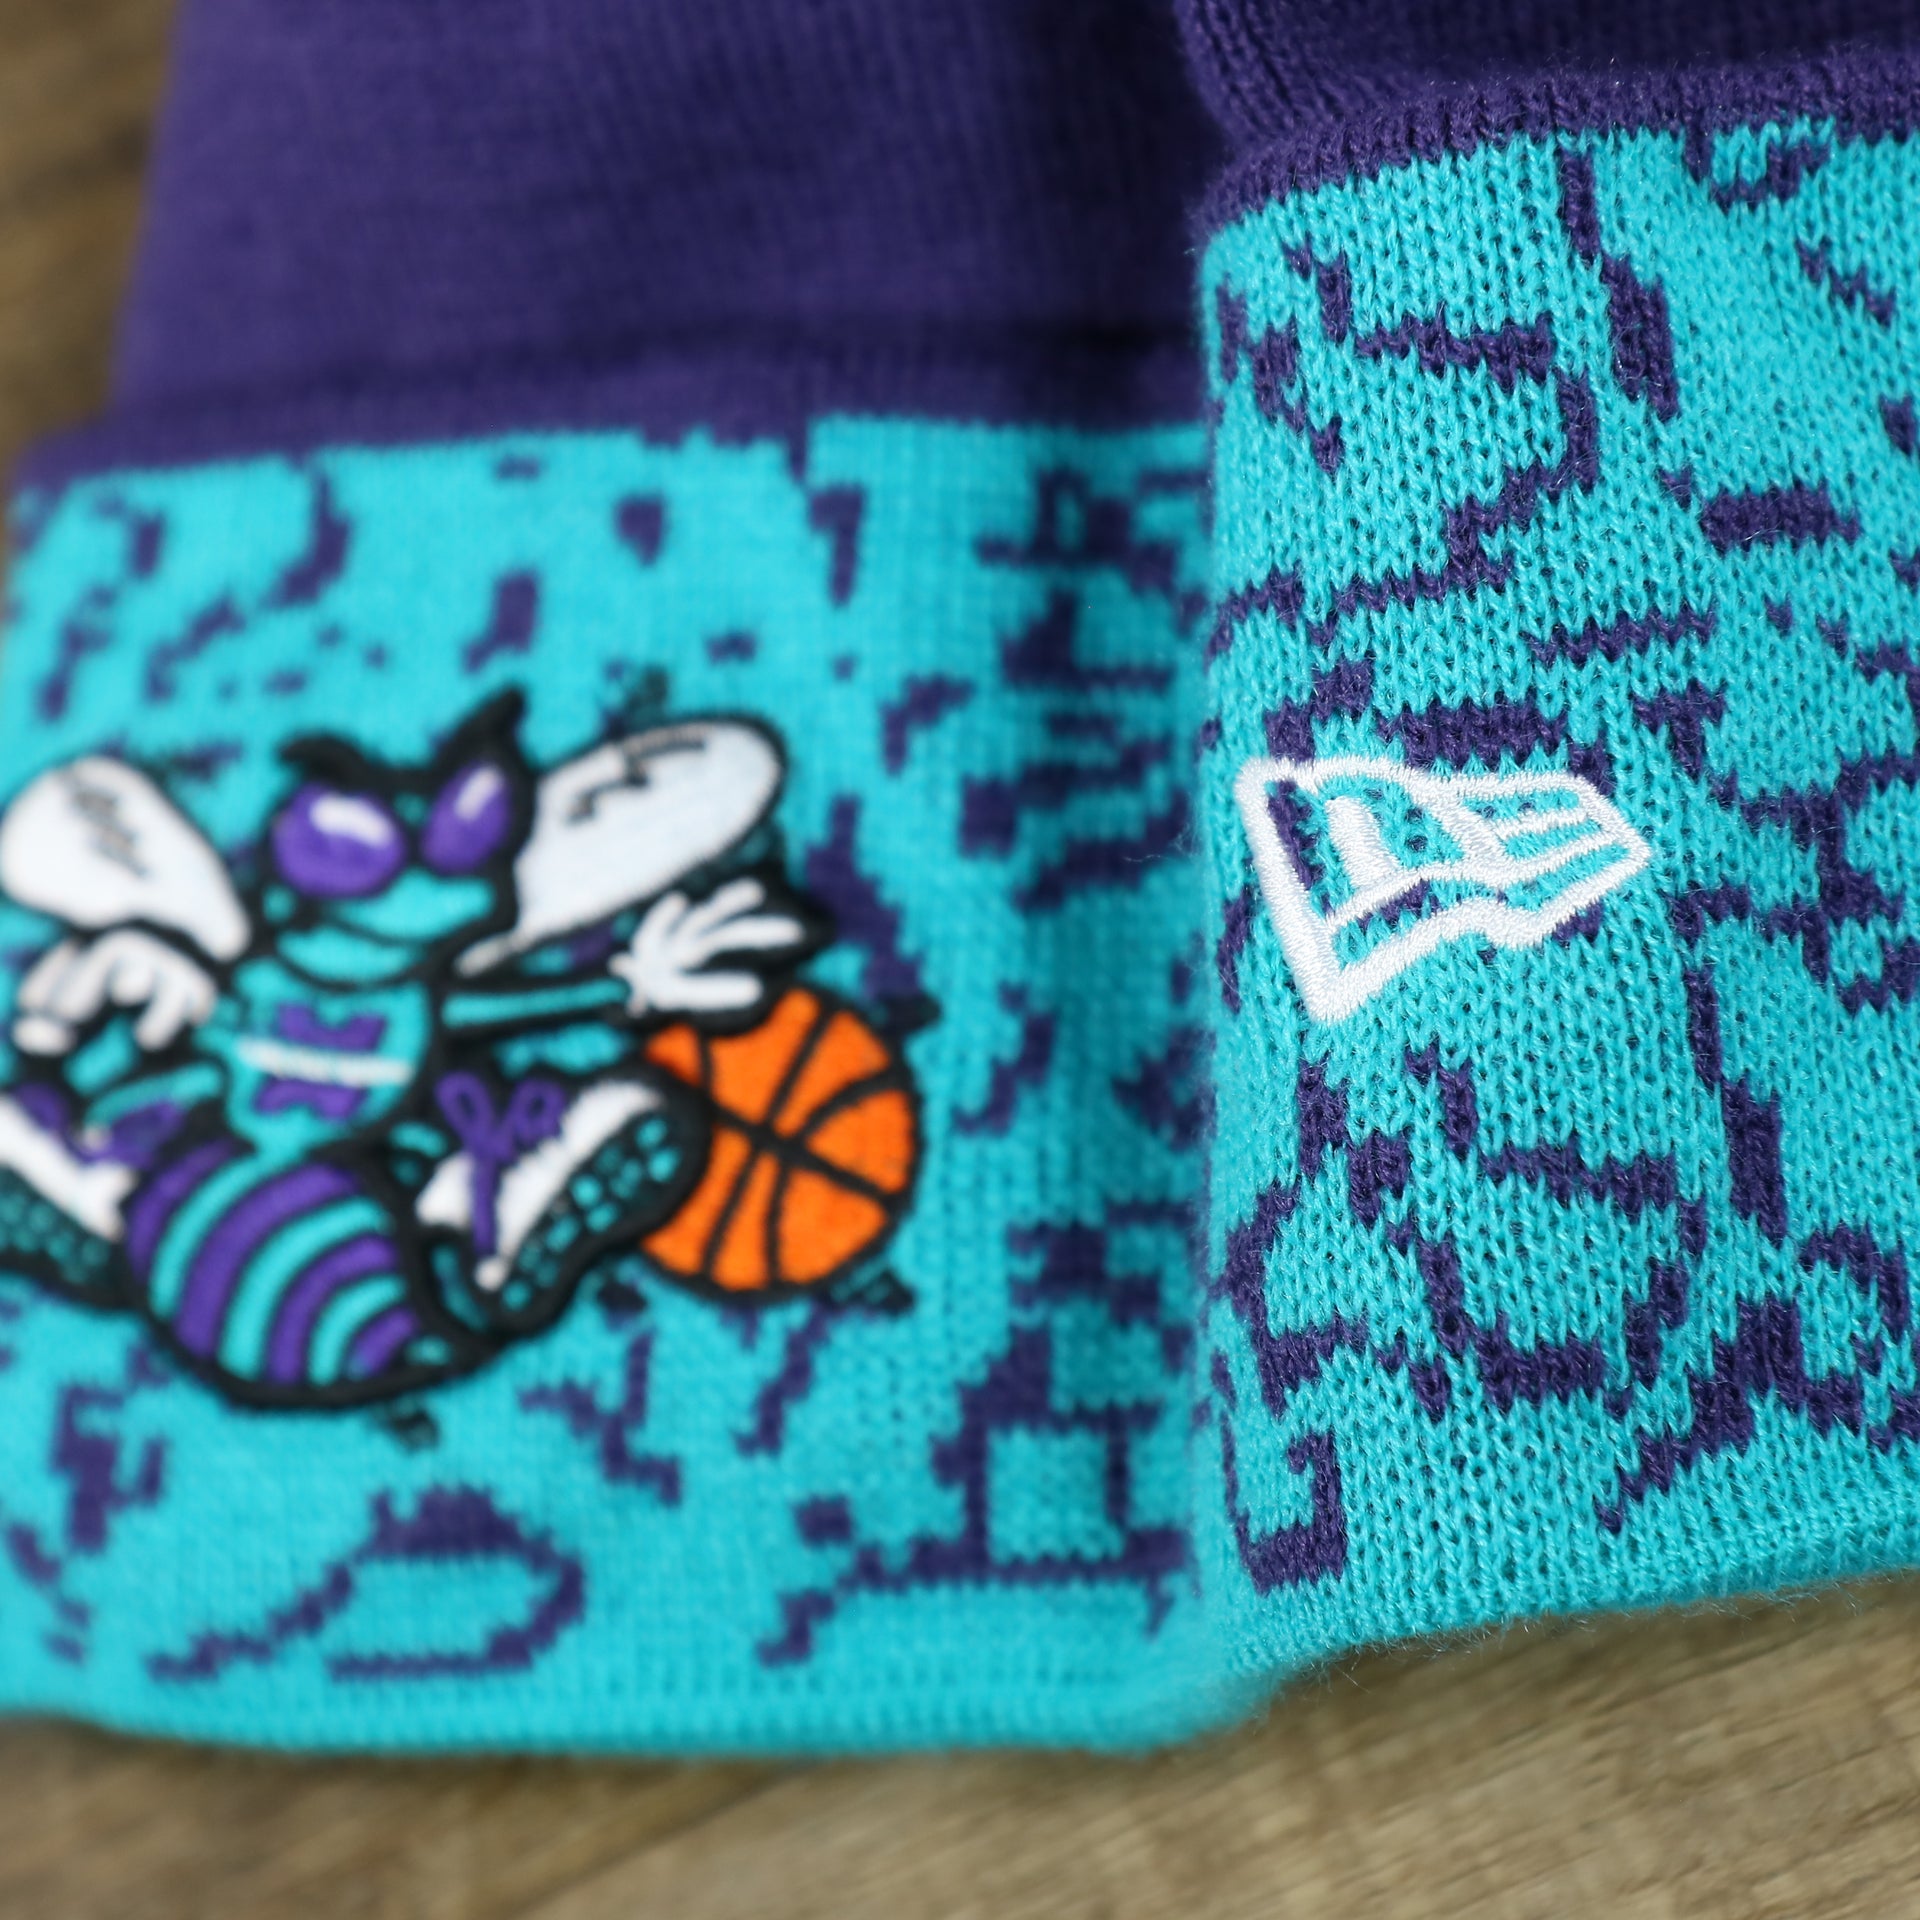 The New Era Logo on the Retro Charlotte Hornets Cuffed Chaos Pom Pom Beanie | Purple And Light Blue Winter Beanie